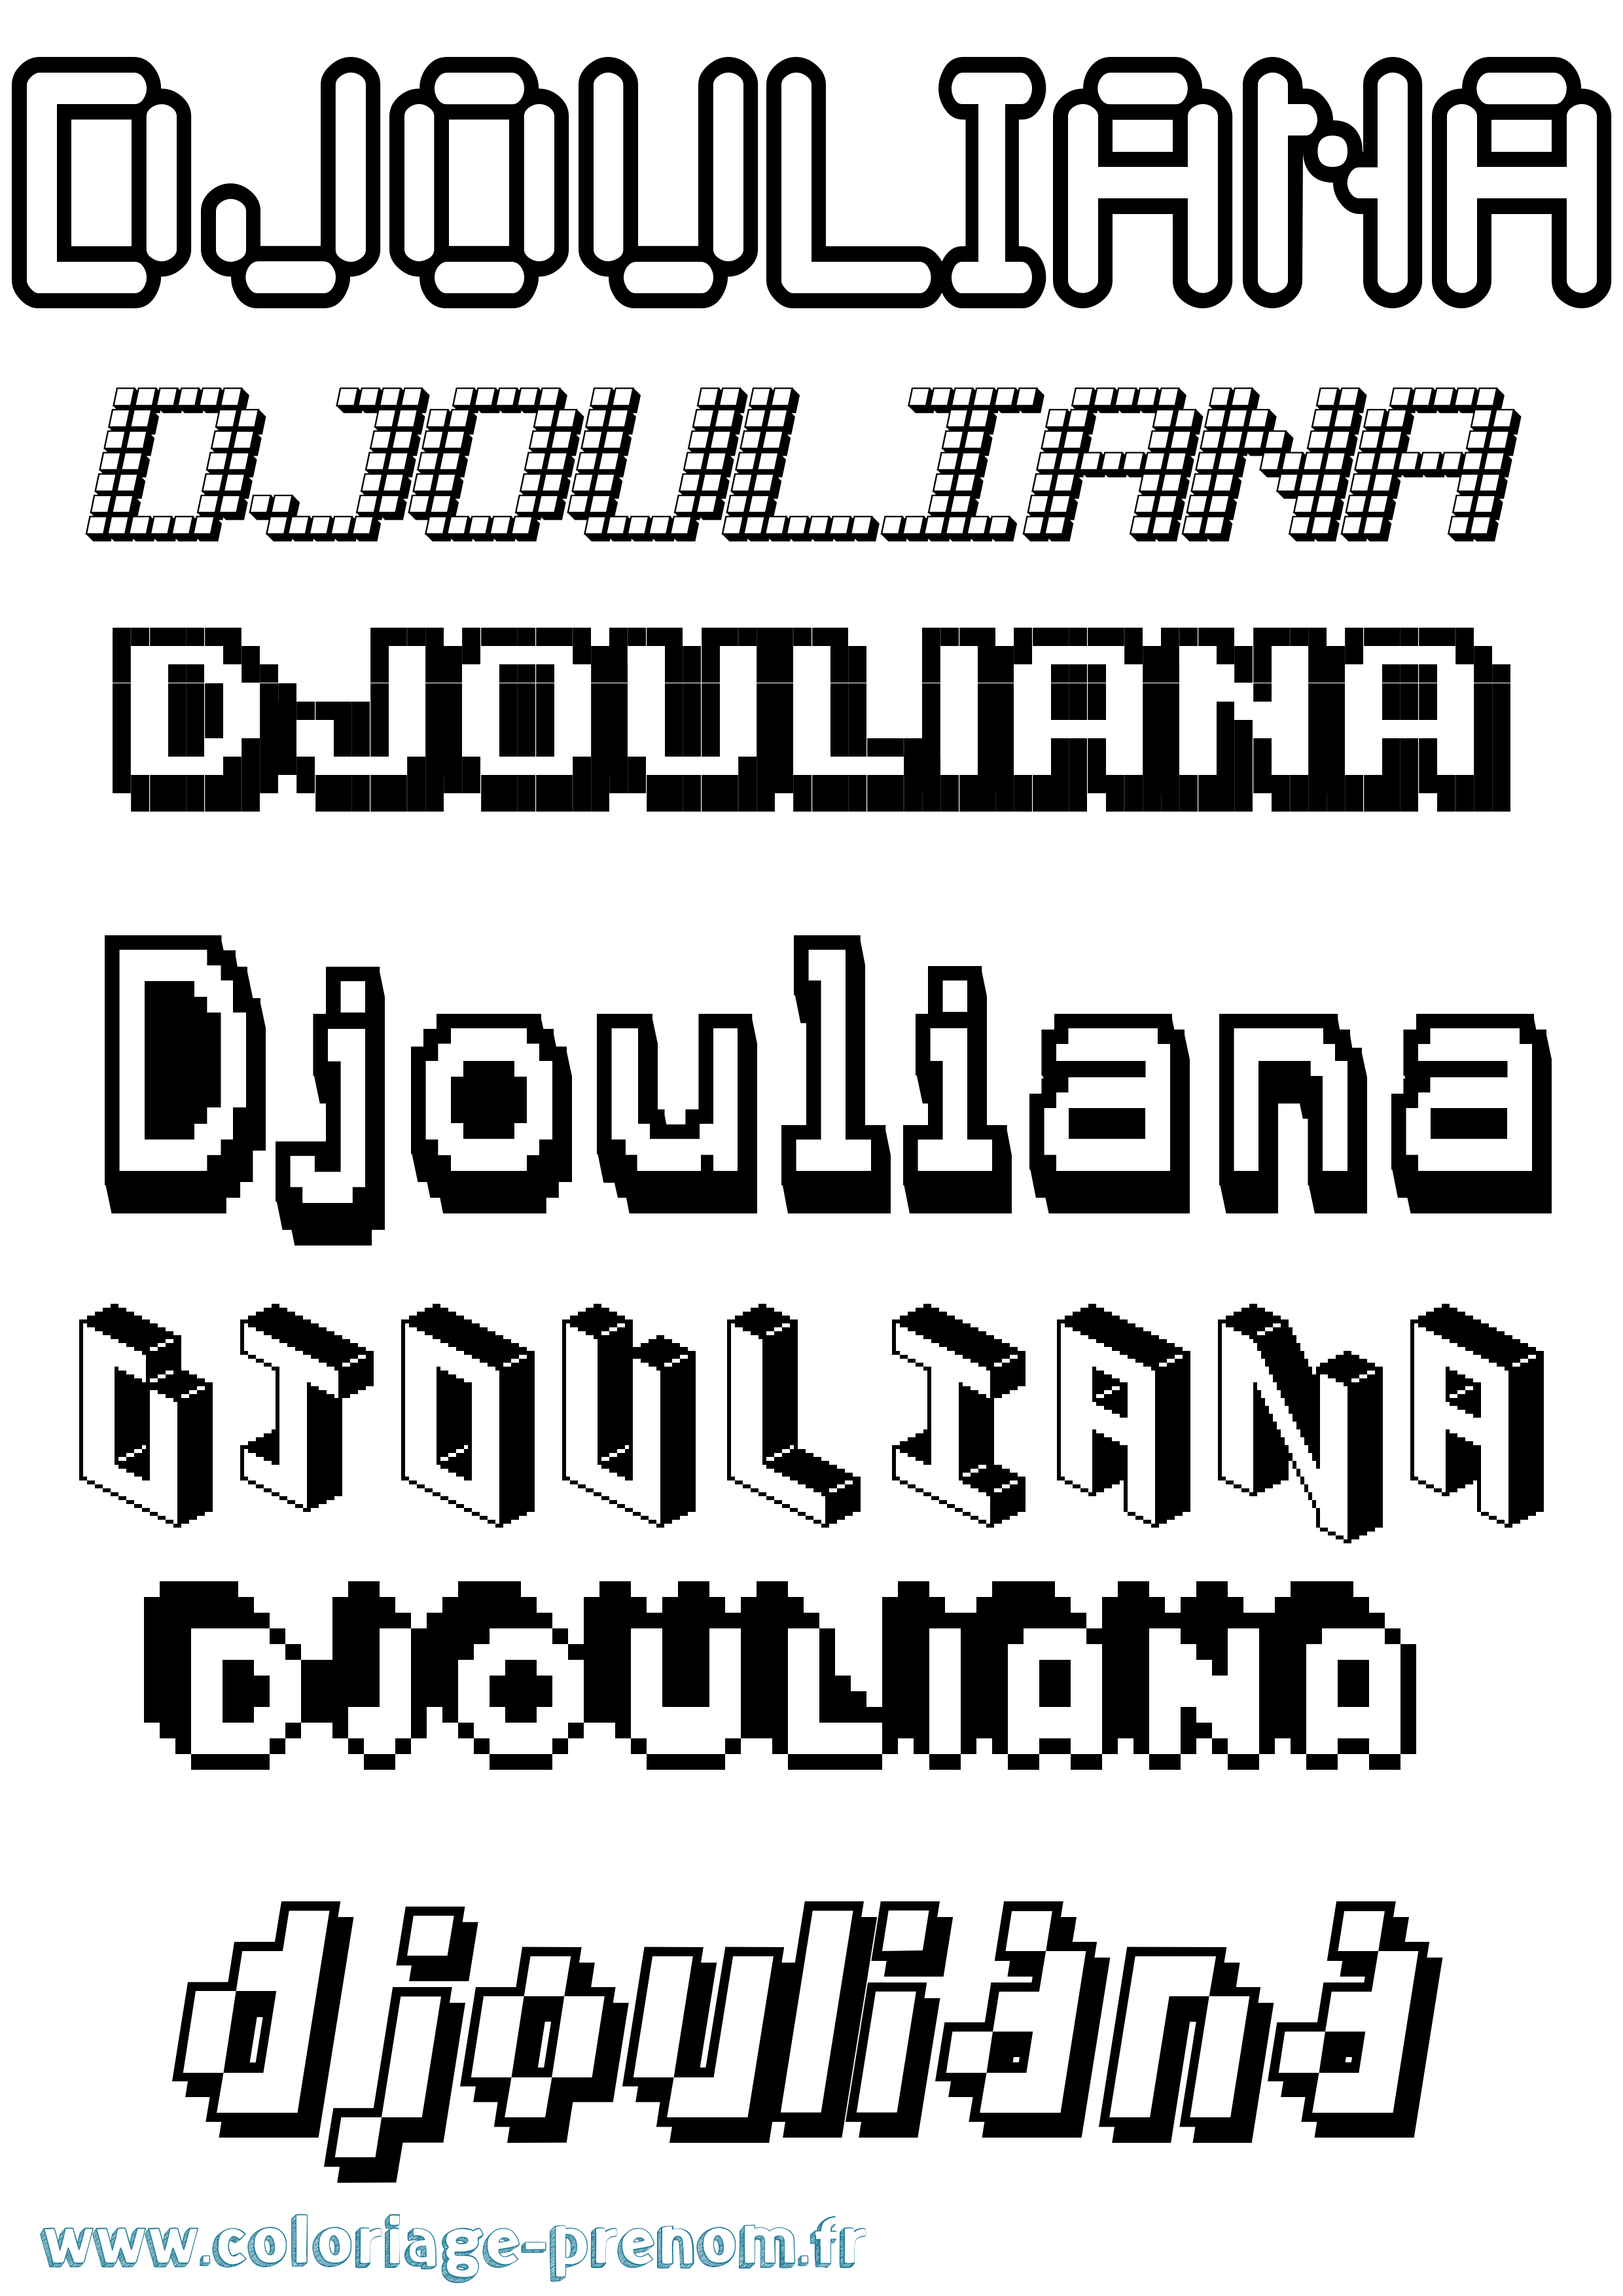 Coloriage prénom Djouliana Pixel